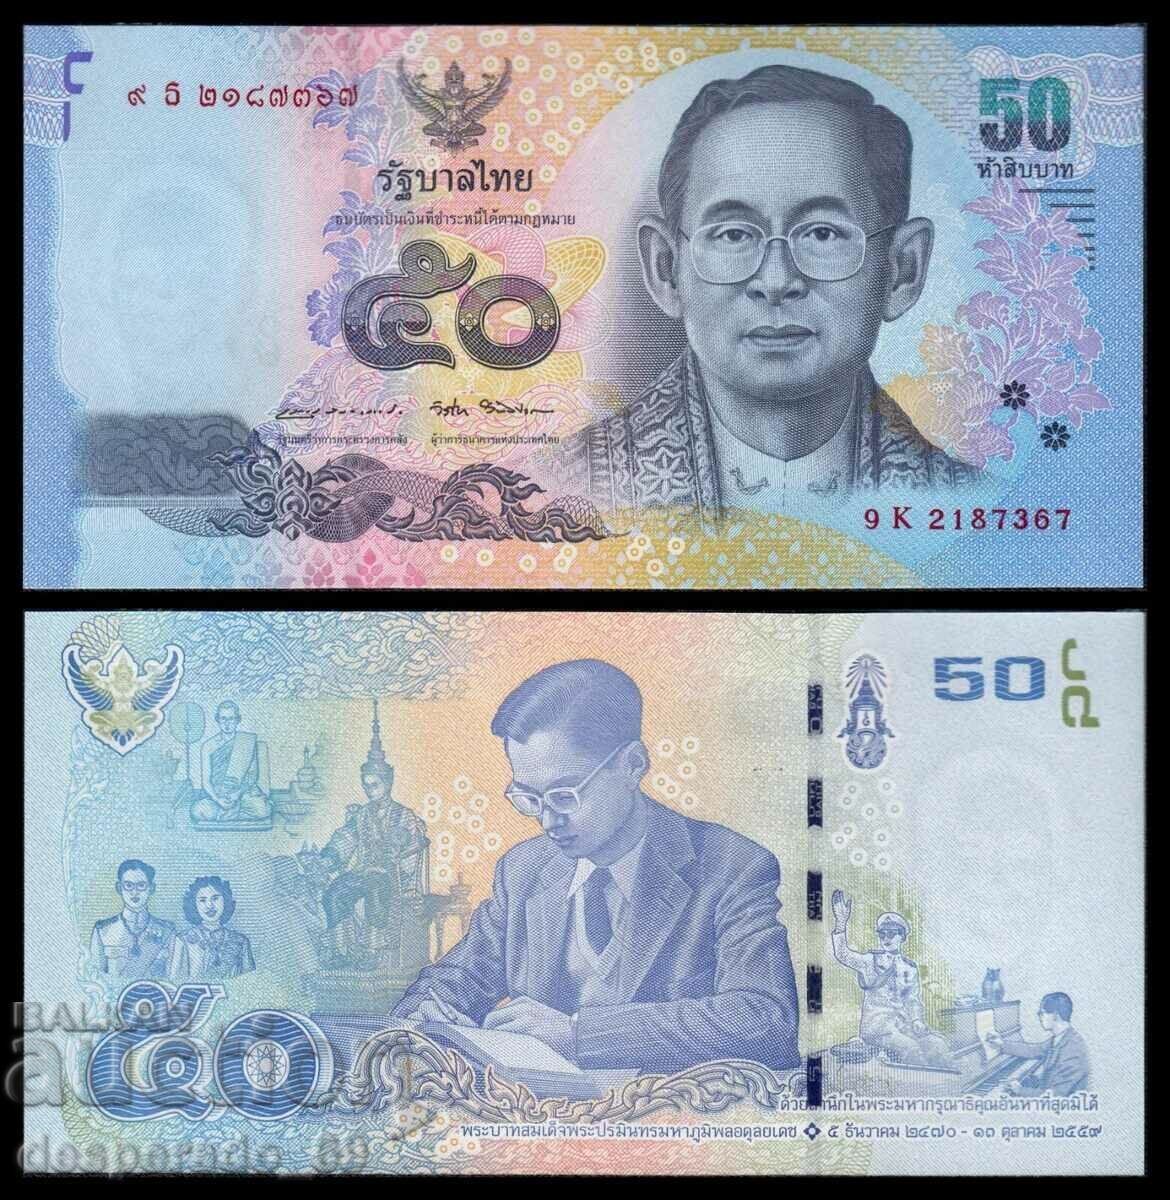 (¯`'•.¸ THAILAND 50 baht 2017 UNC ¸.•'´¯)